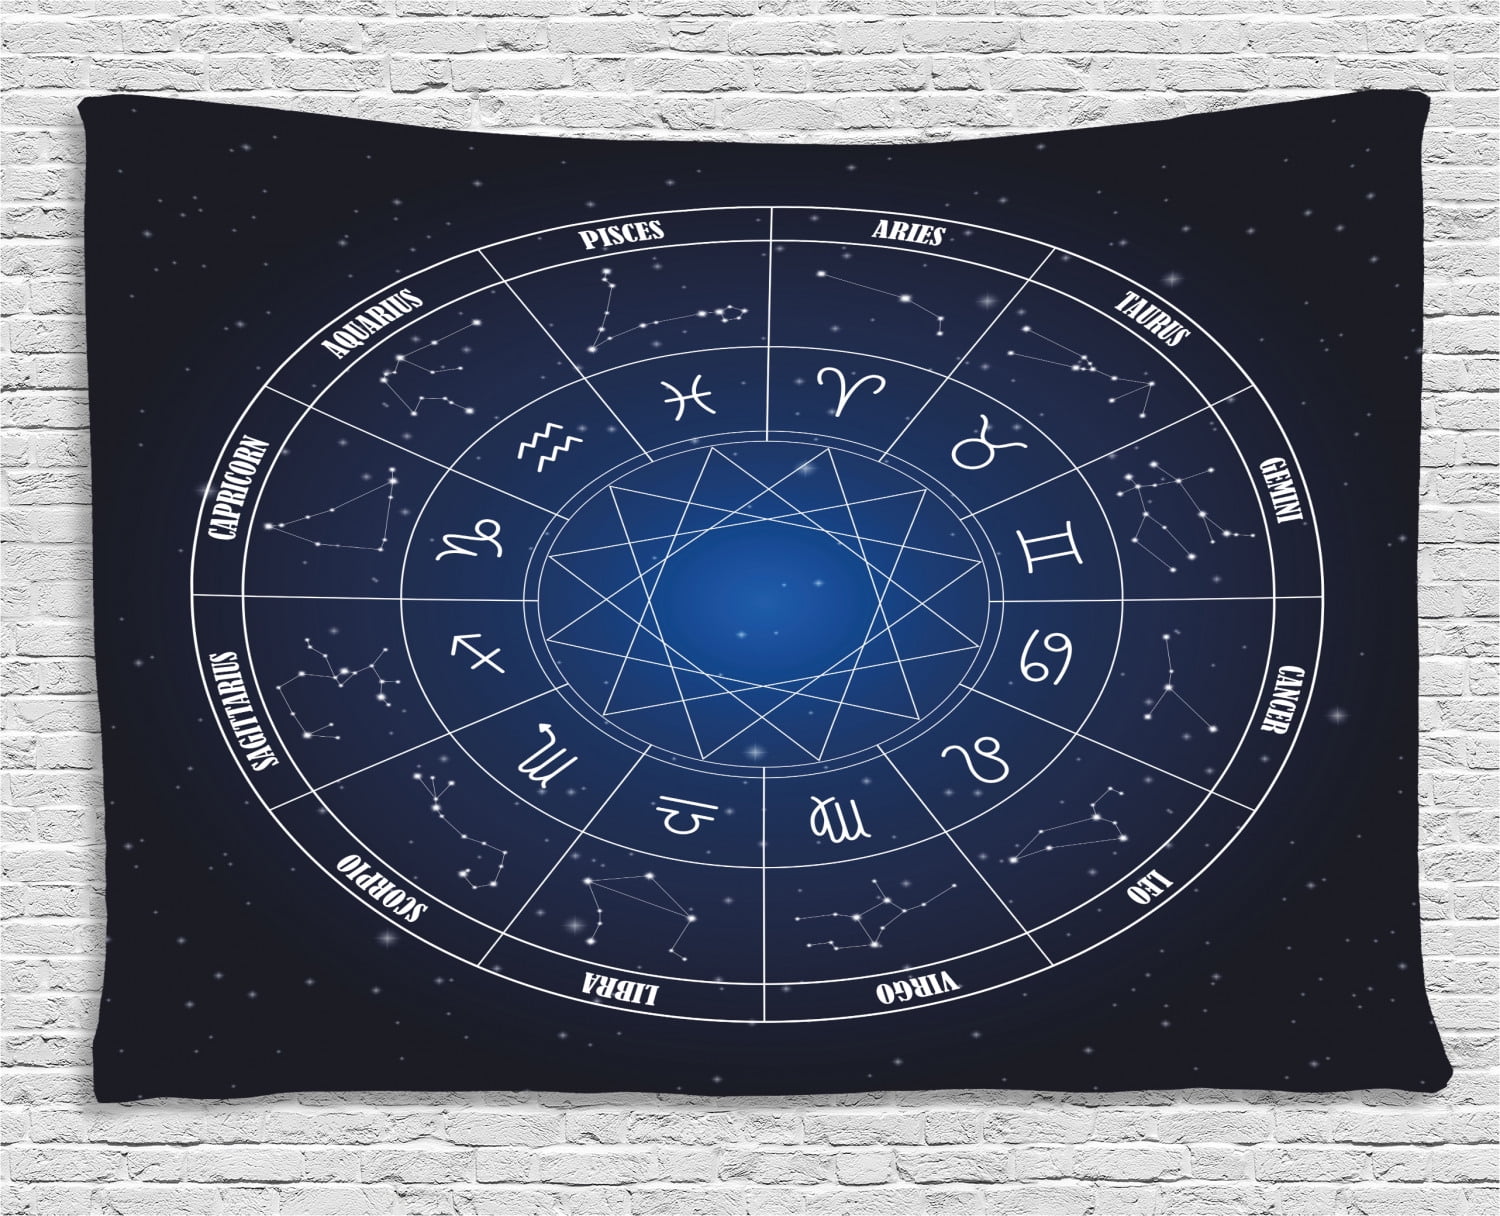 Zodiac astrology chart - gaswrealtor